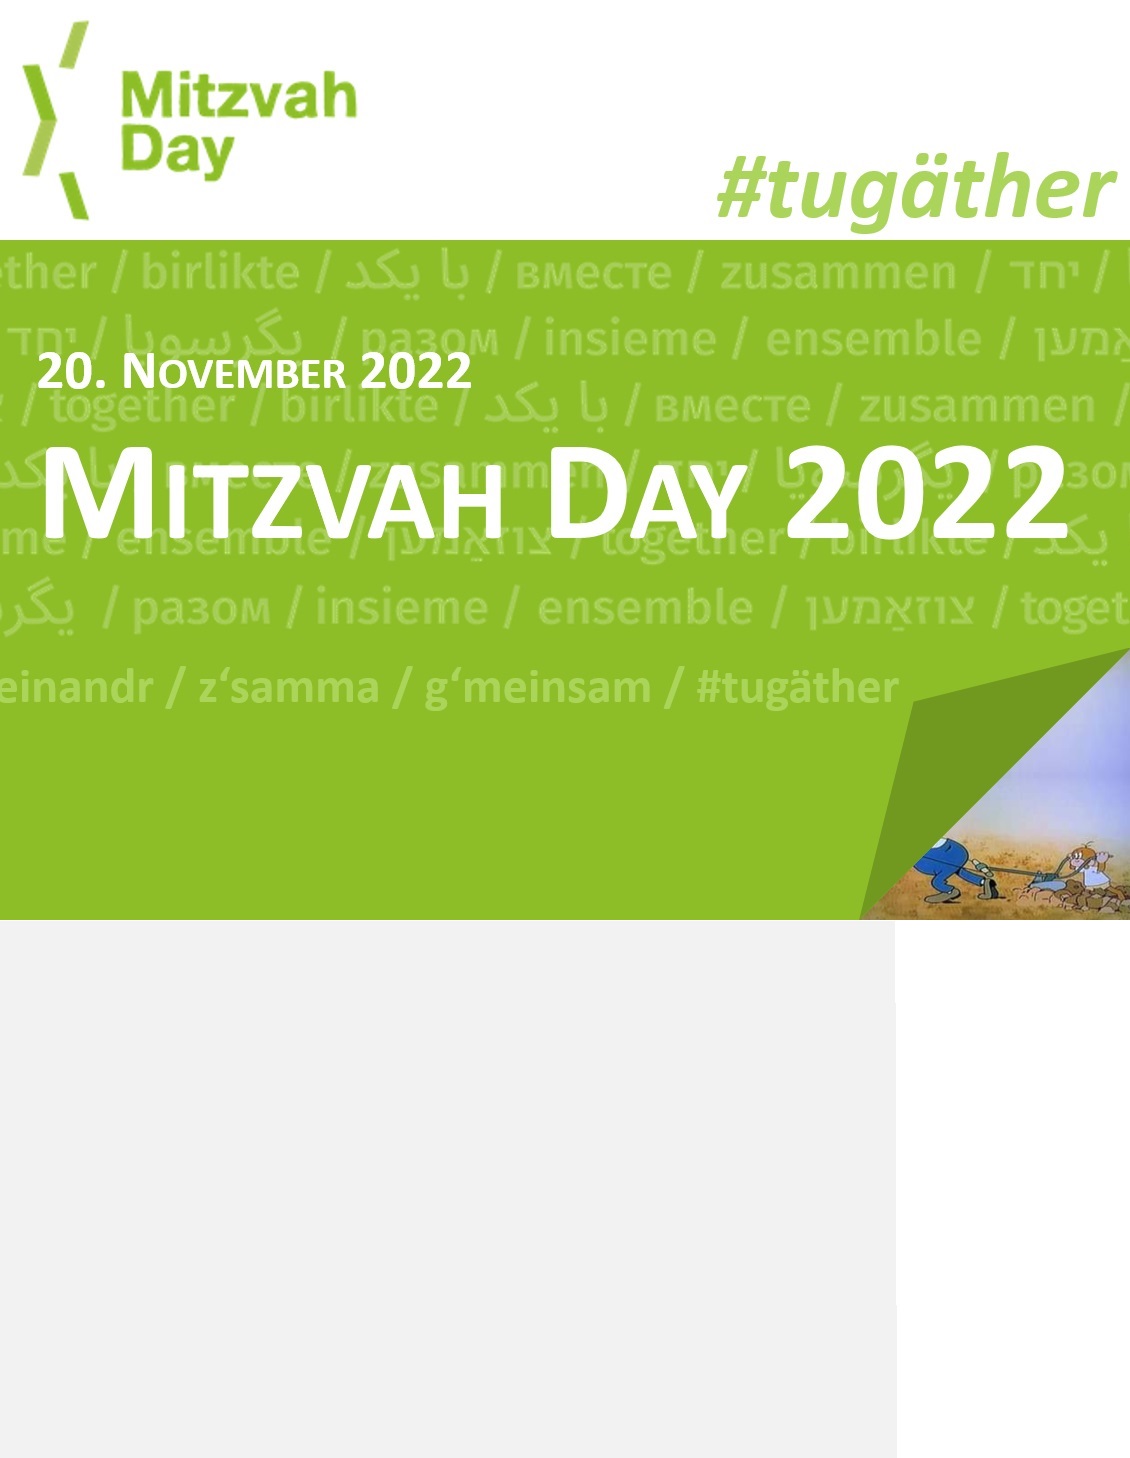 Mitzvah Day 2022 - #tugather